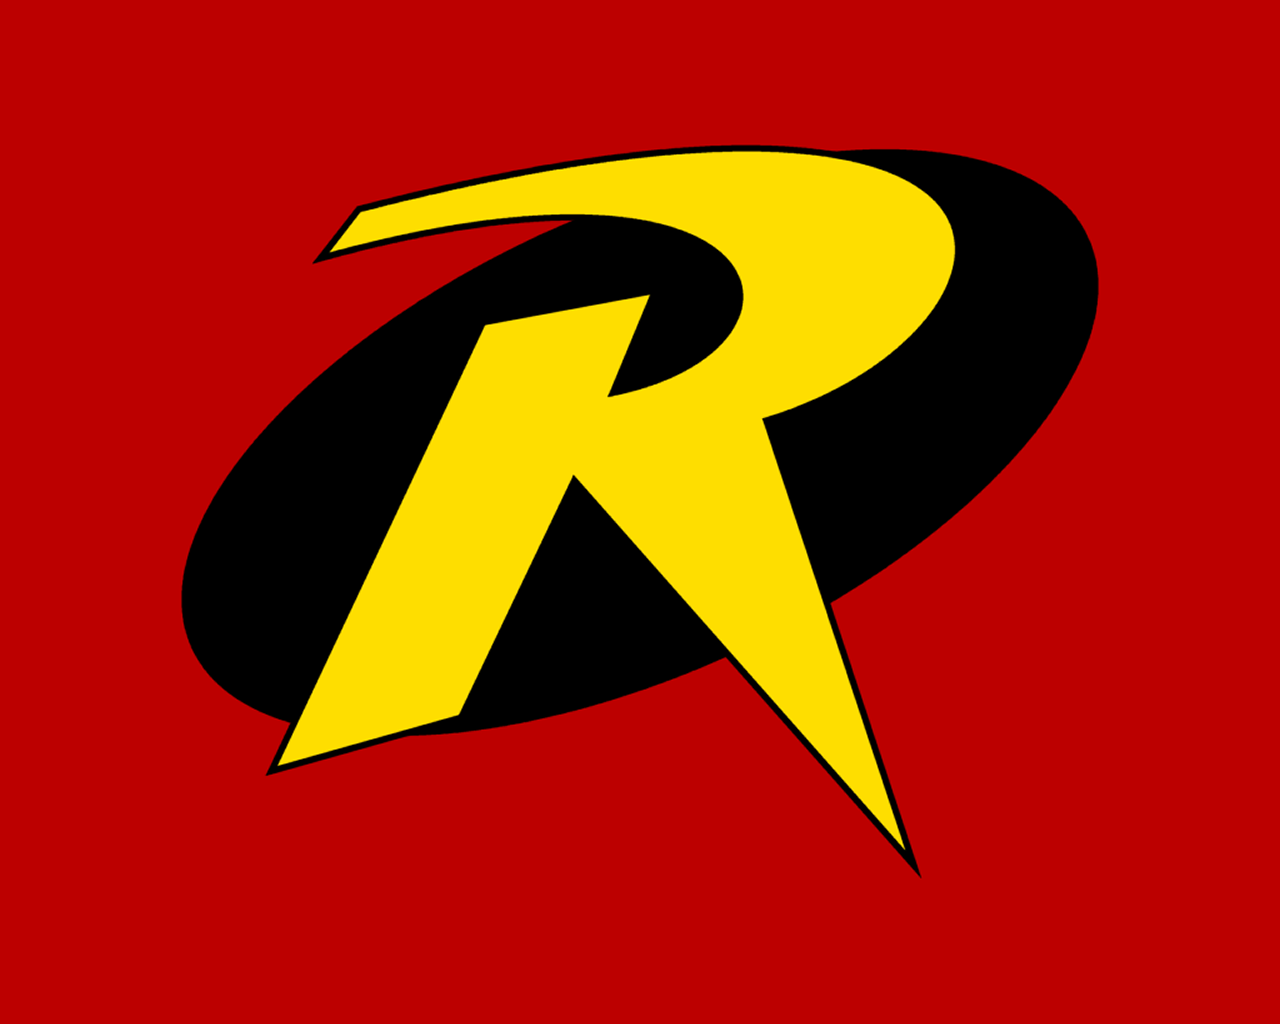 Batman and robin logo clipart